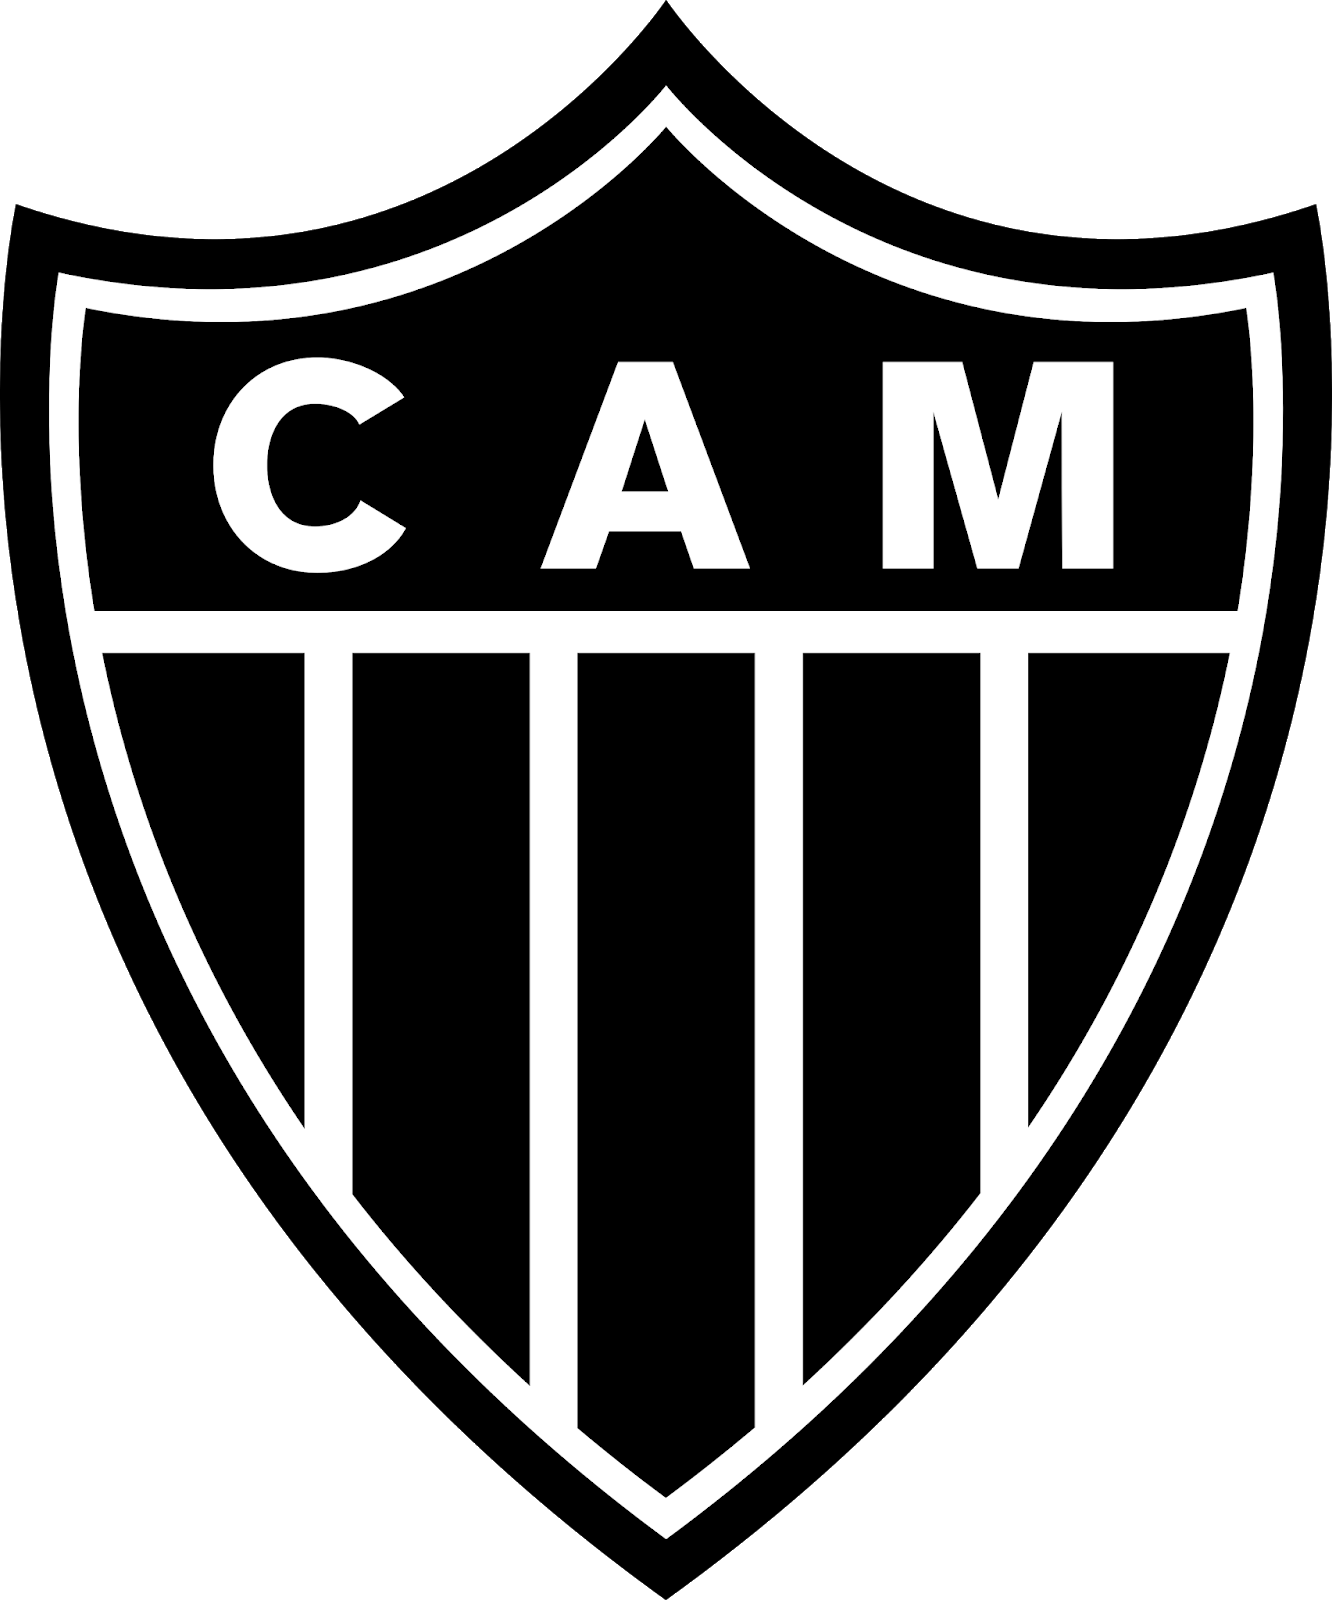 File:Clube Atletico Mineiro HQ Belo Horizonte.jpg - Wikipedia